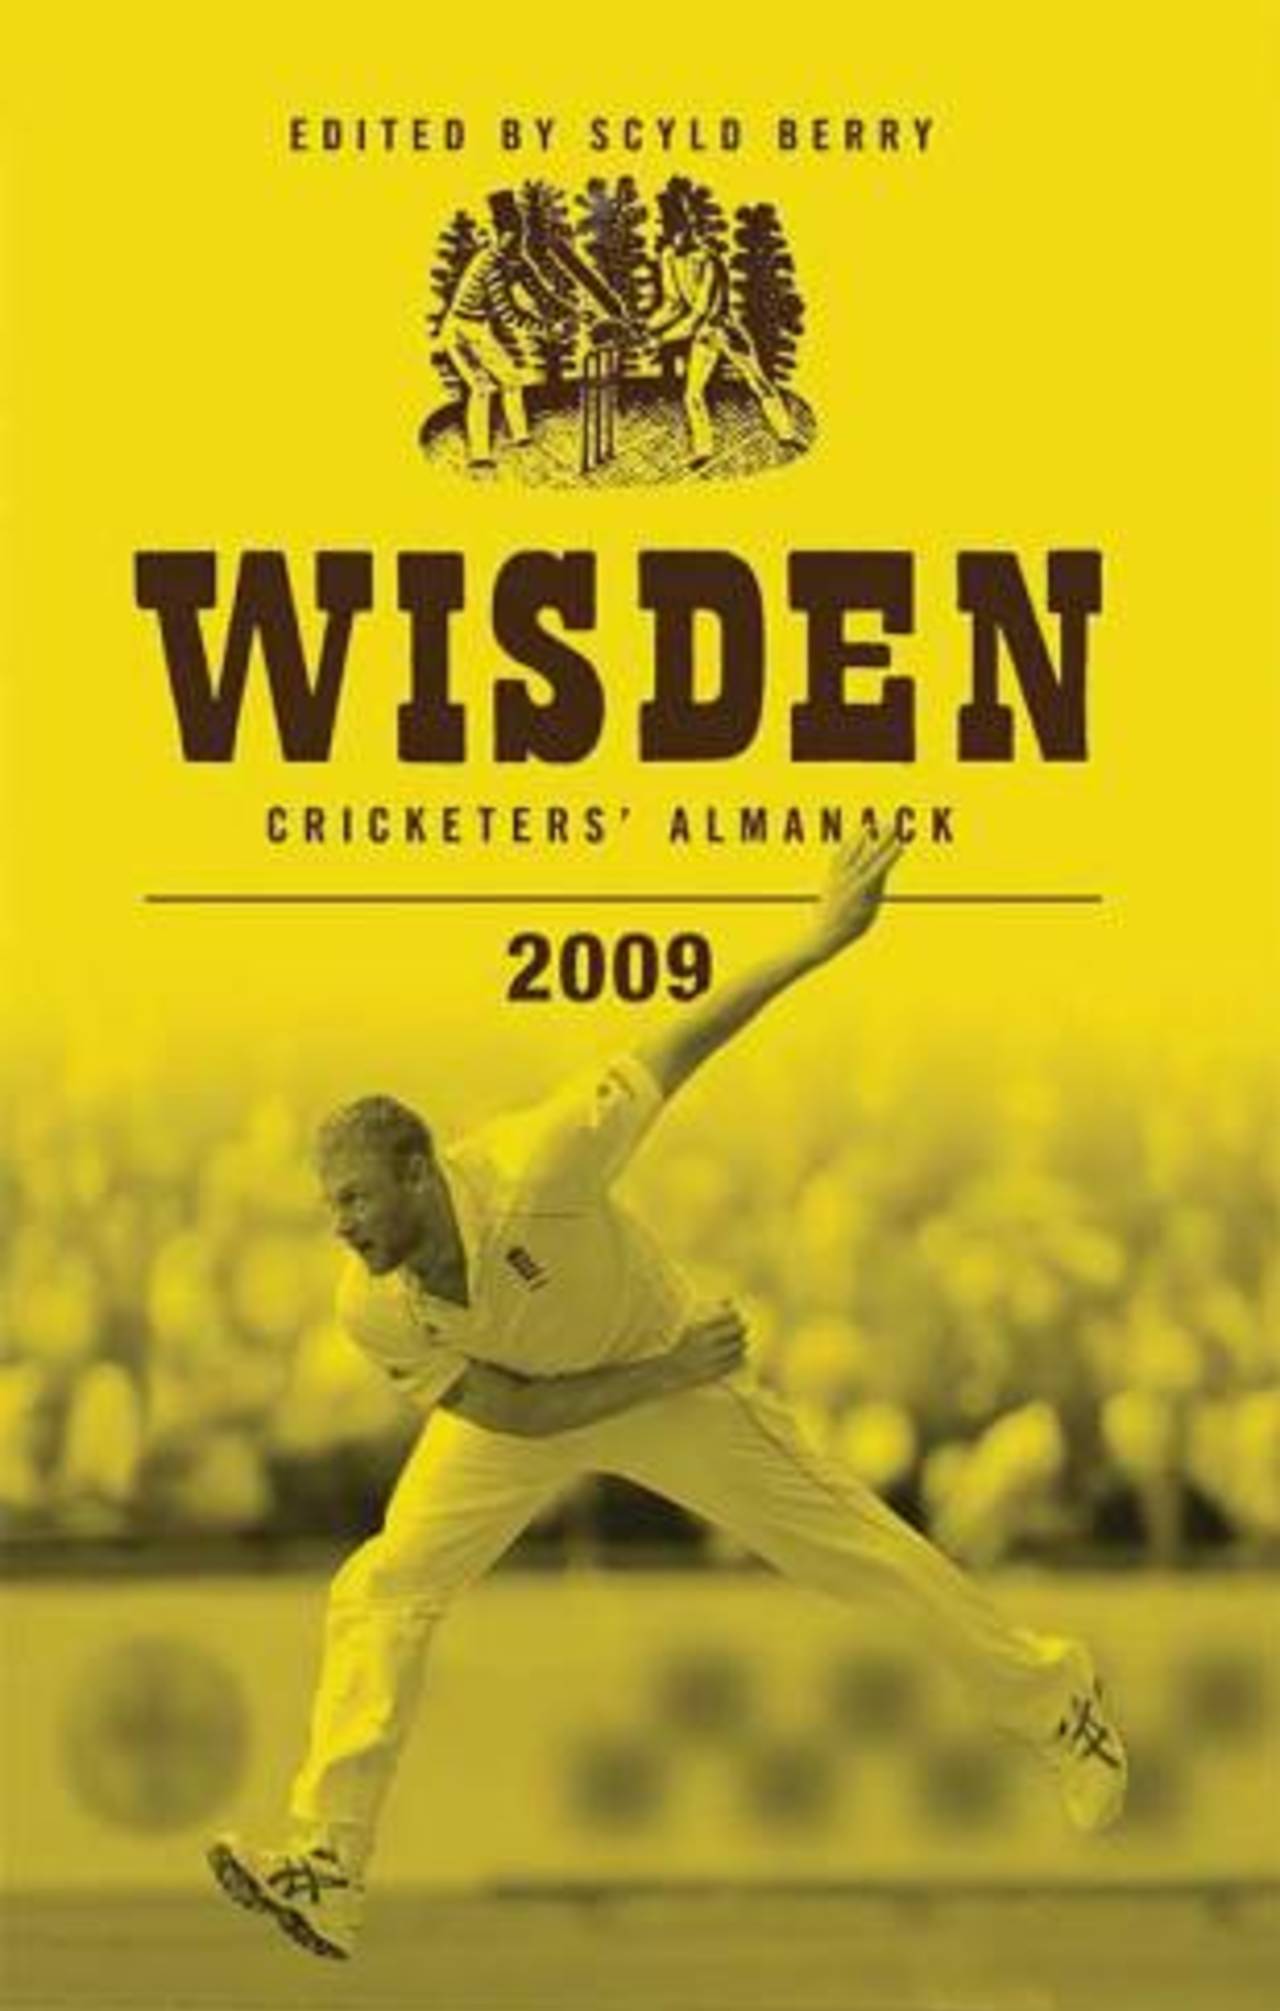 Cover of the 2009 Wisden Cricketers' Almanack